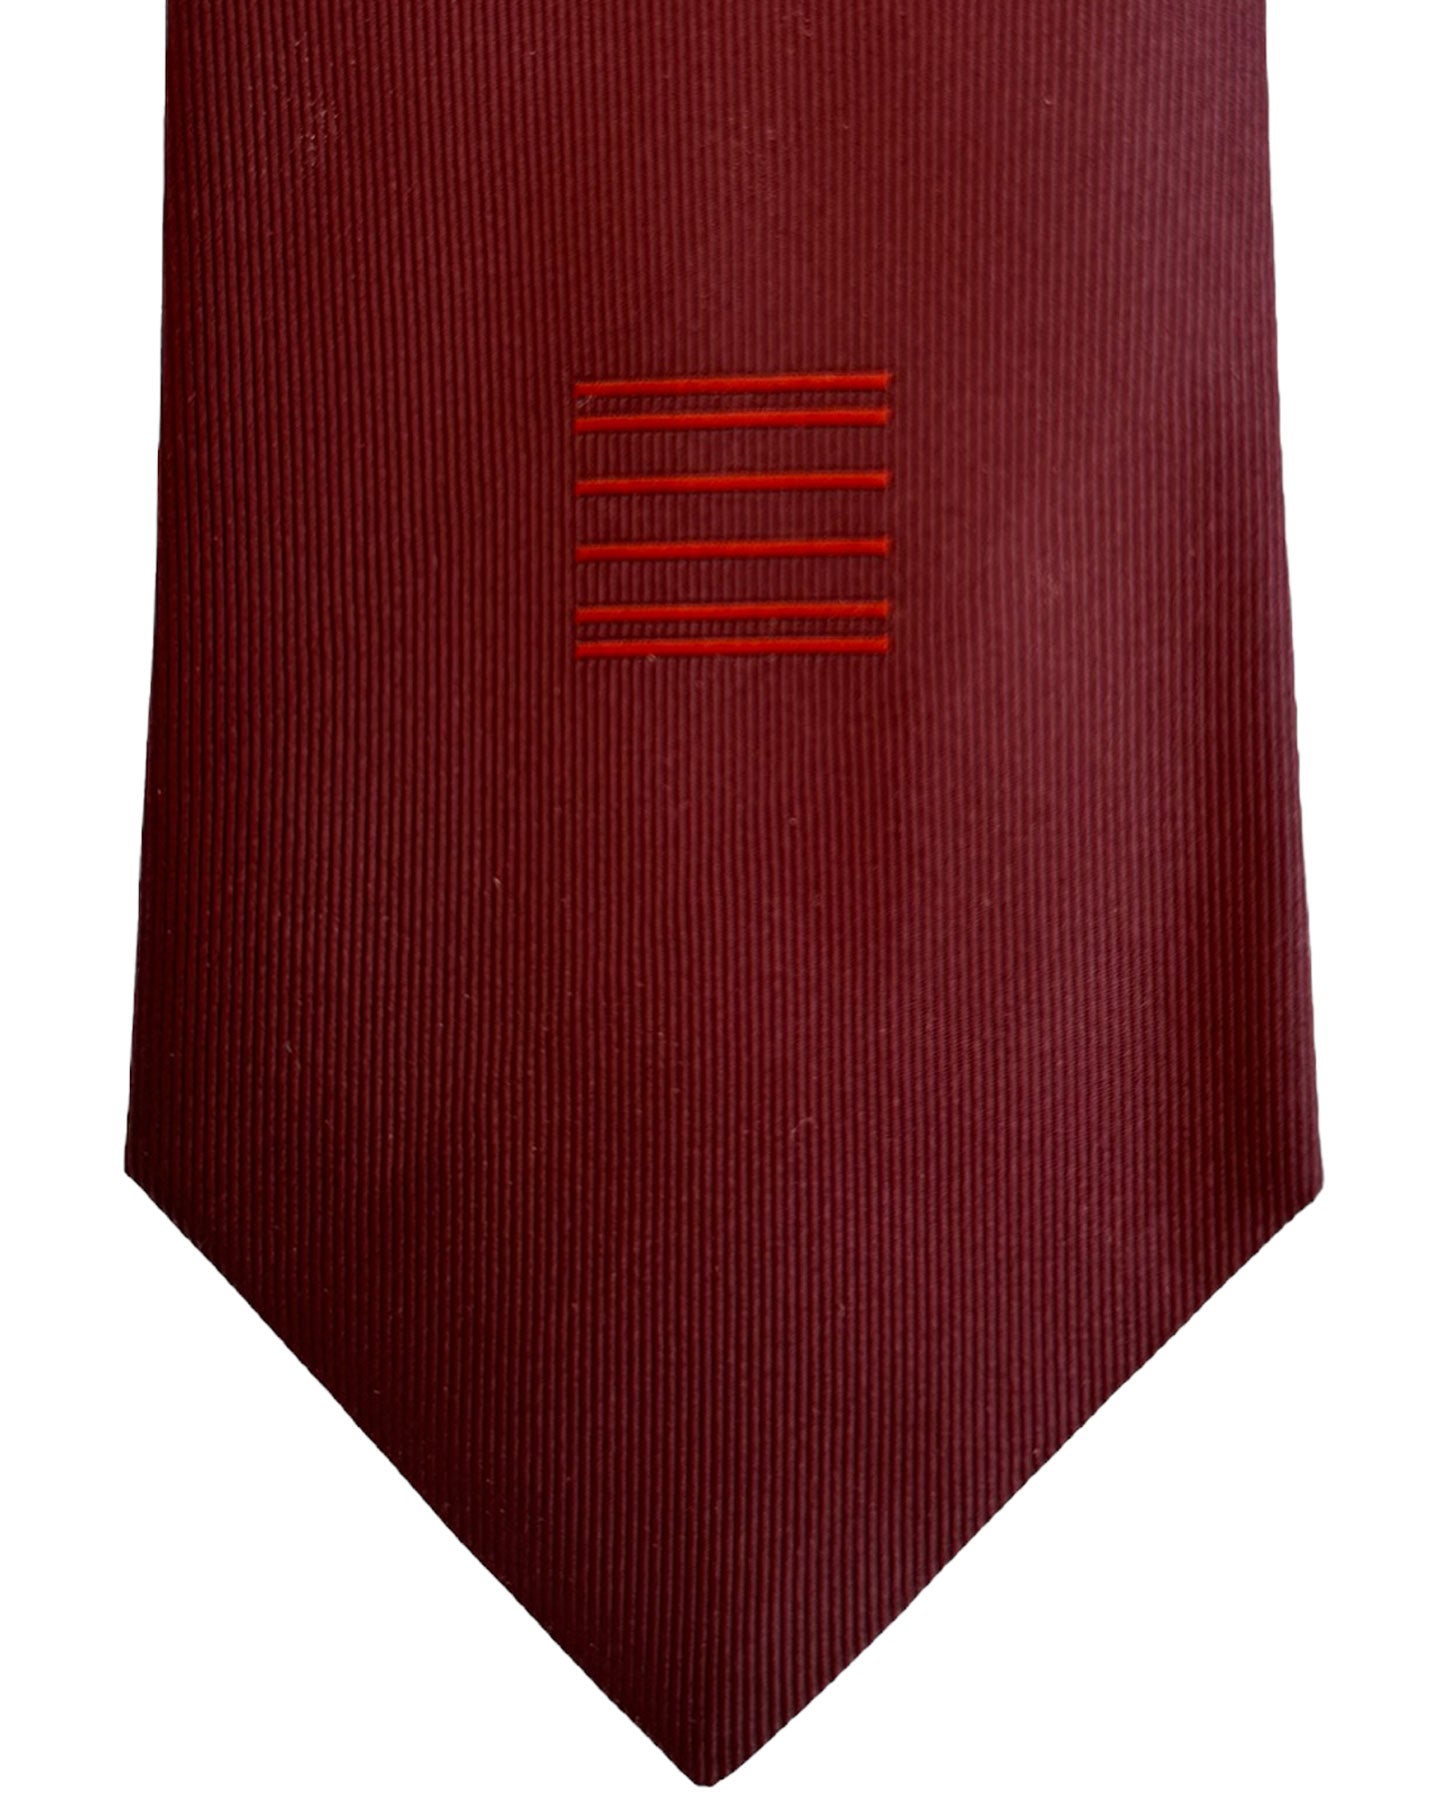 Gene Meyer Tie Maroon Design - Hand Made in Italy